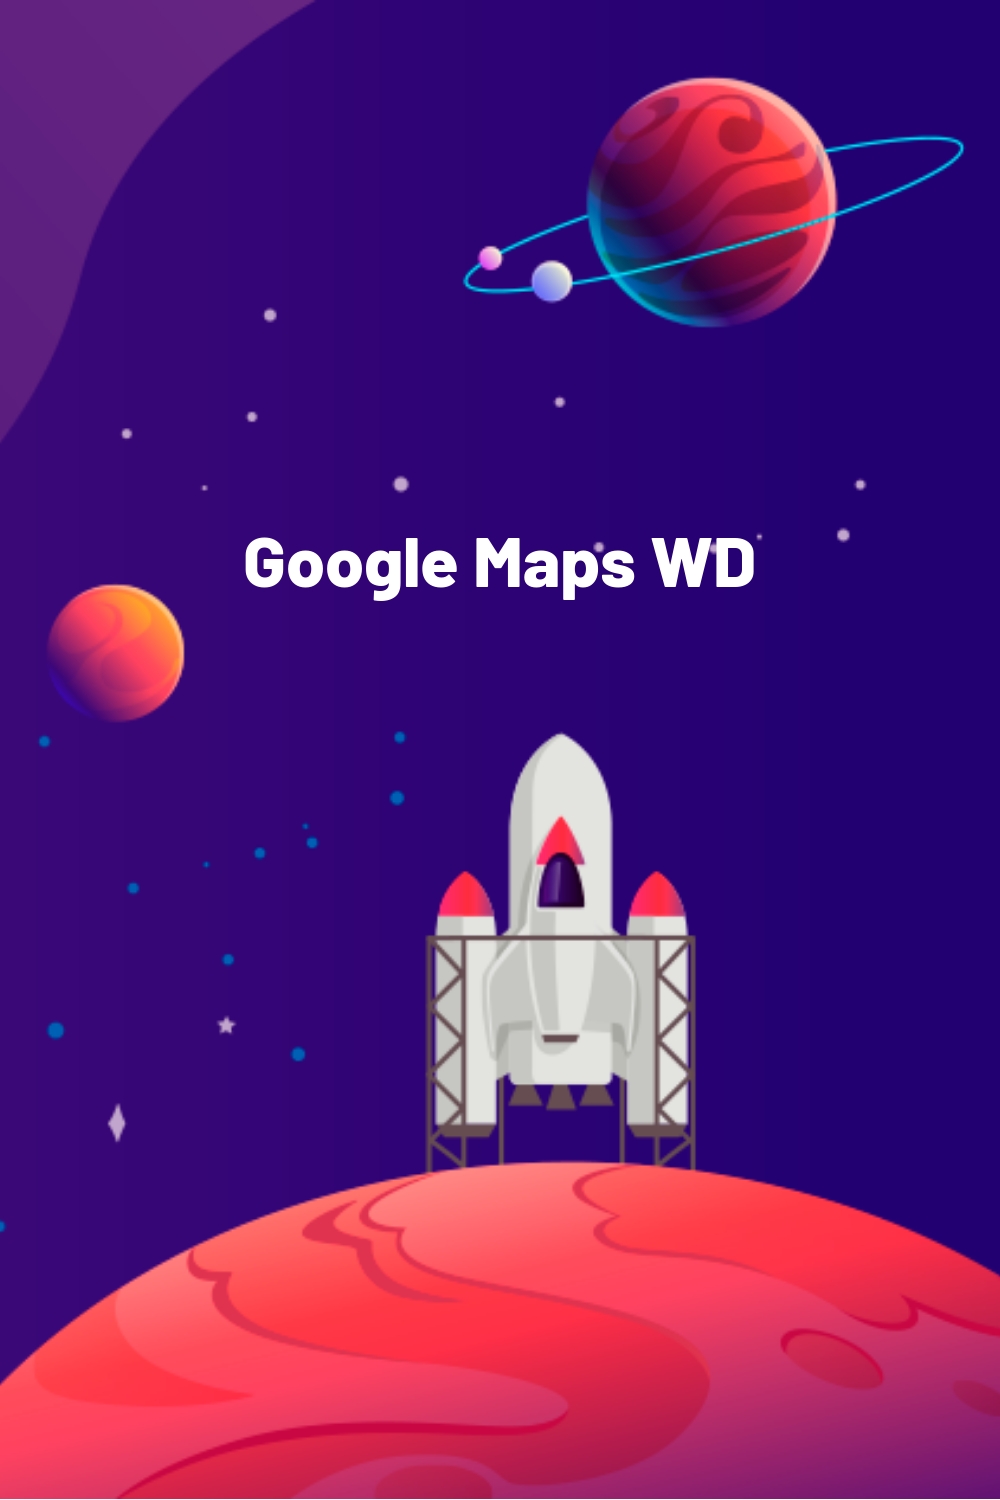 Google Maps WD